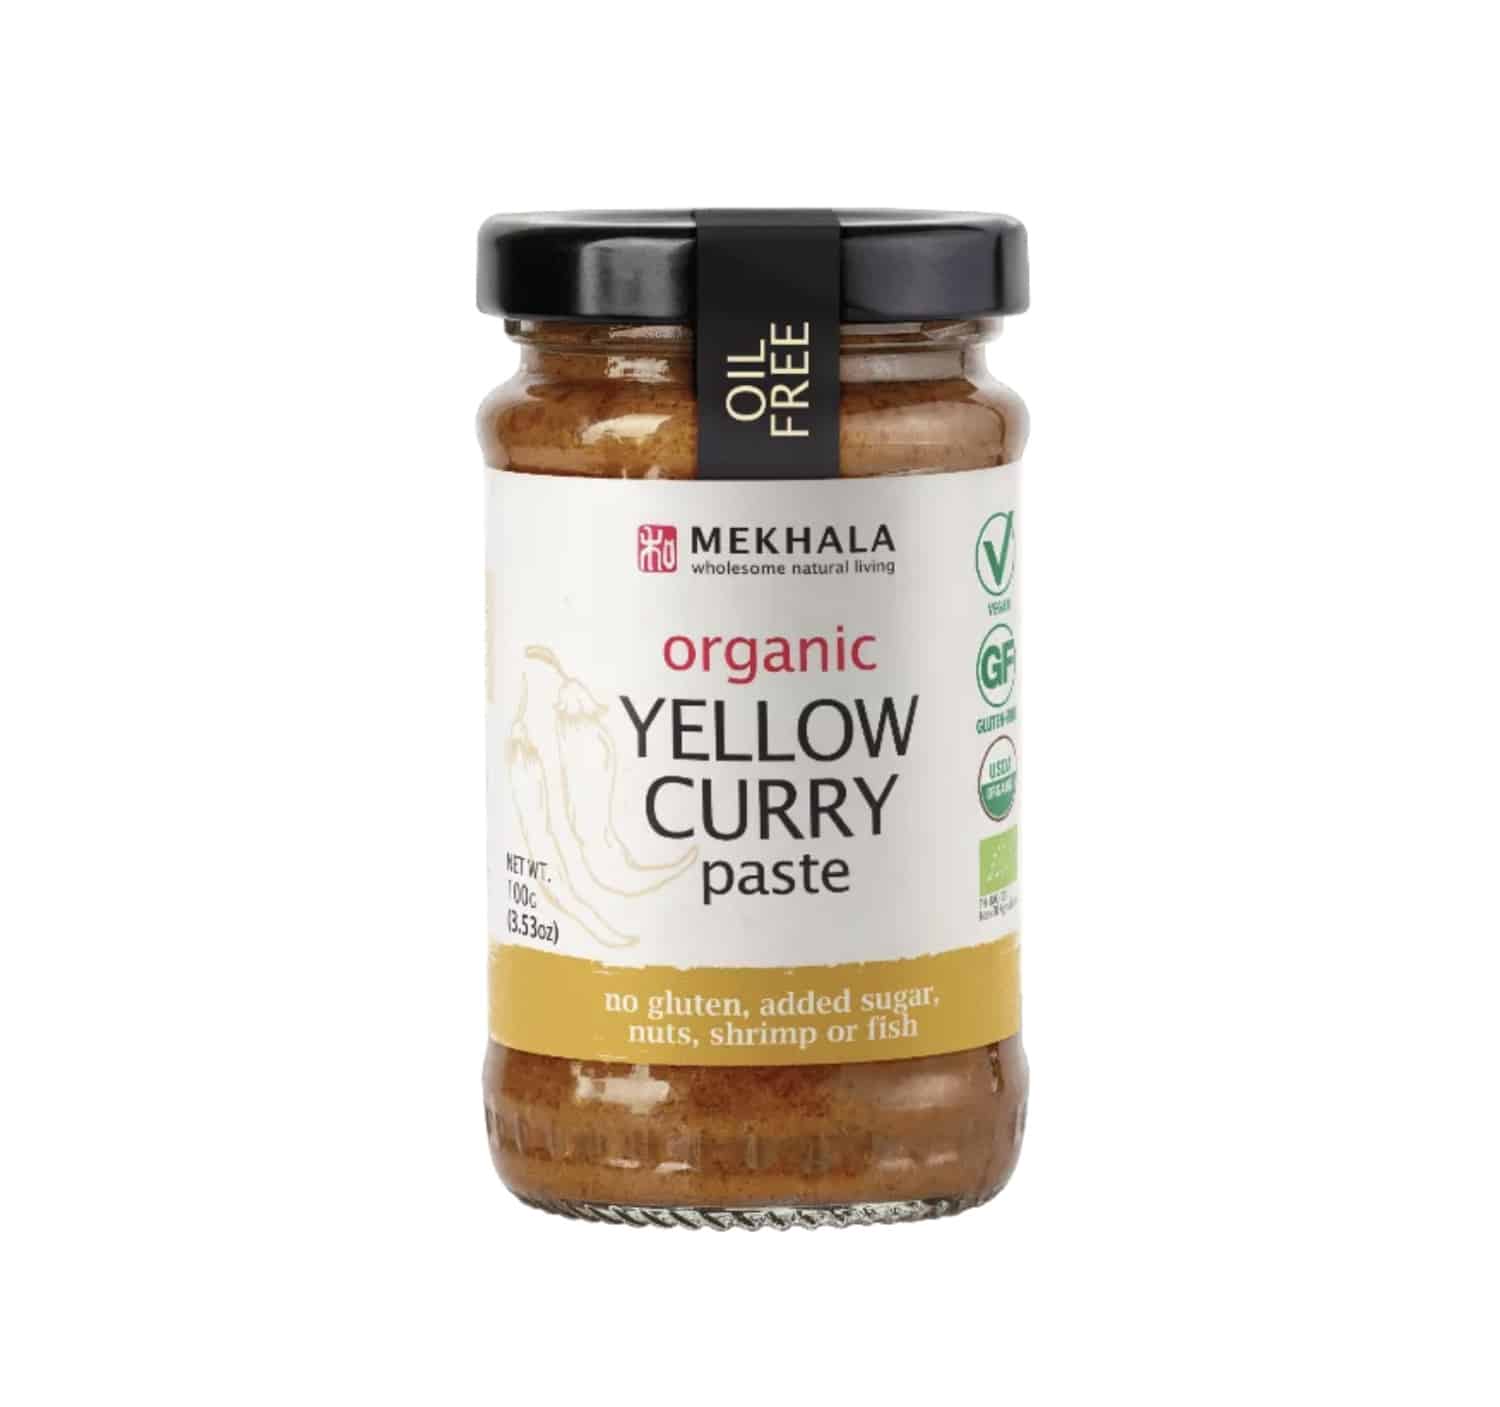 store bought organic vegan yellow curry paste in a jar from Mekhala